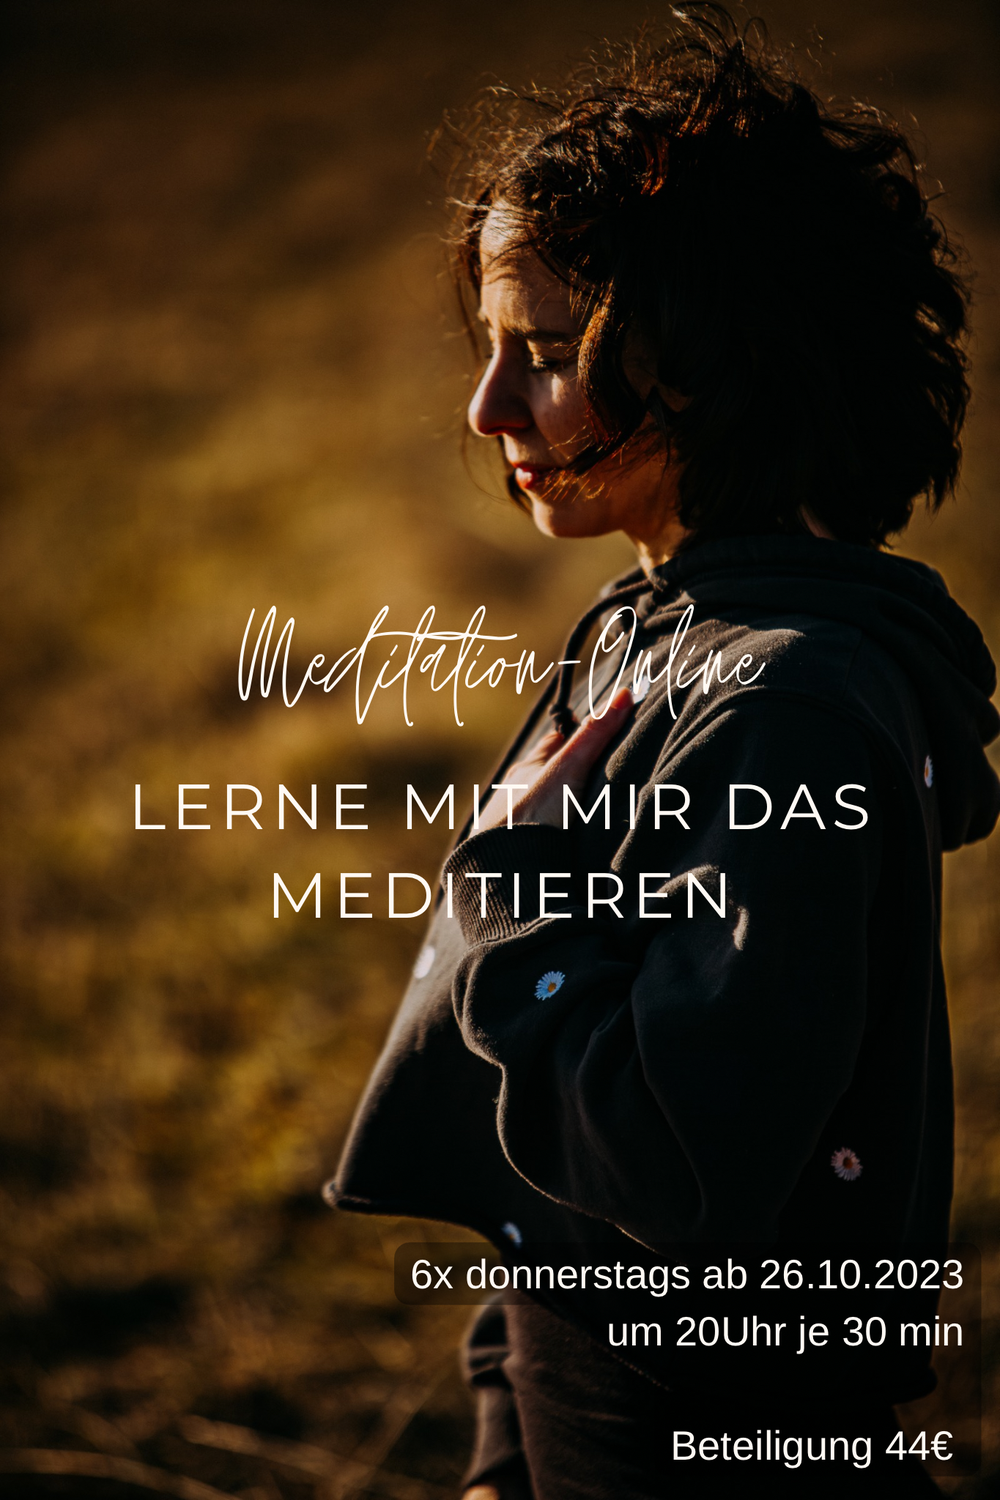 Meditations-Onlineworkshop ab 26.10.2023